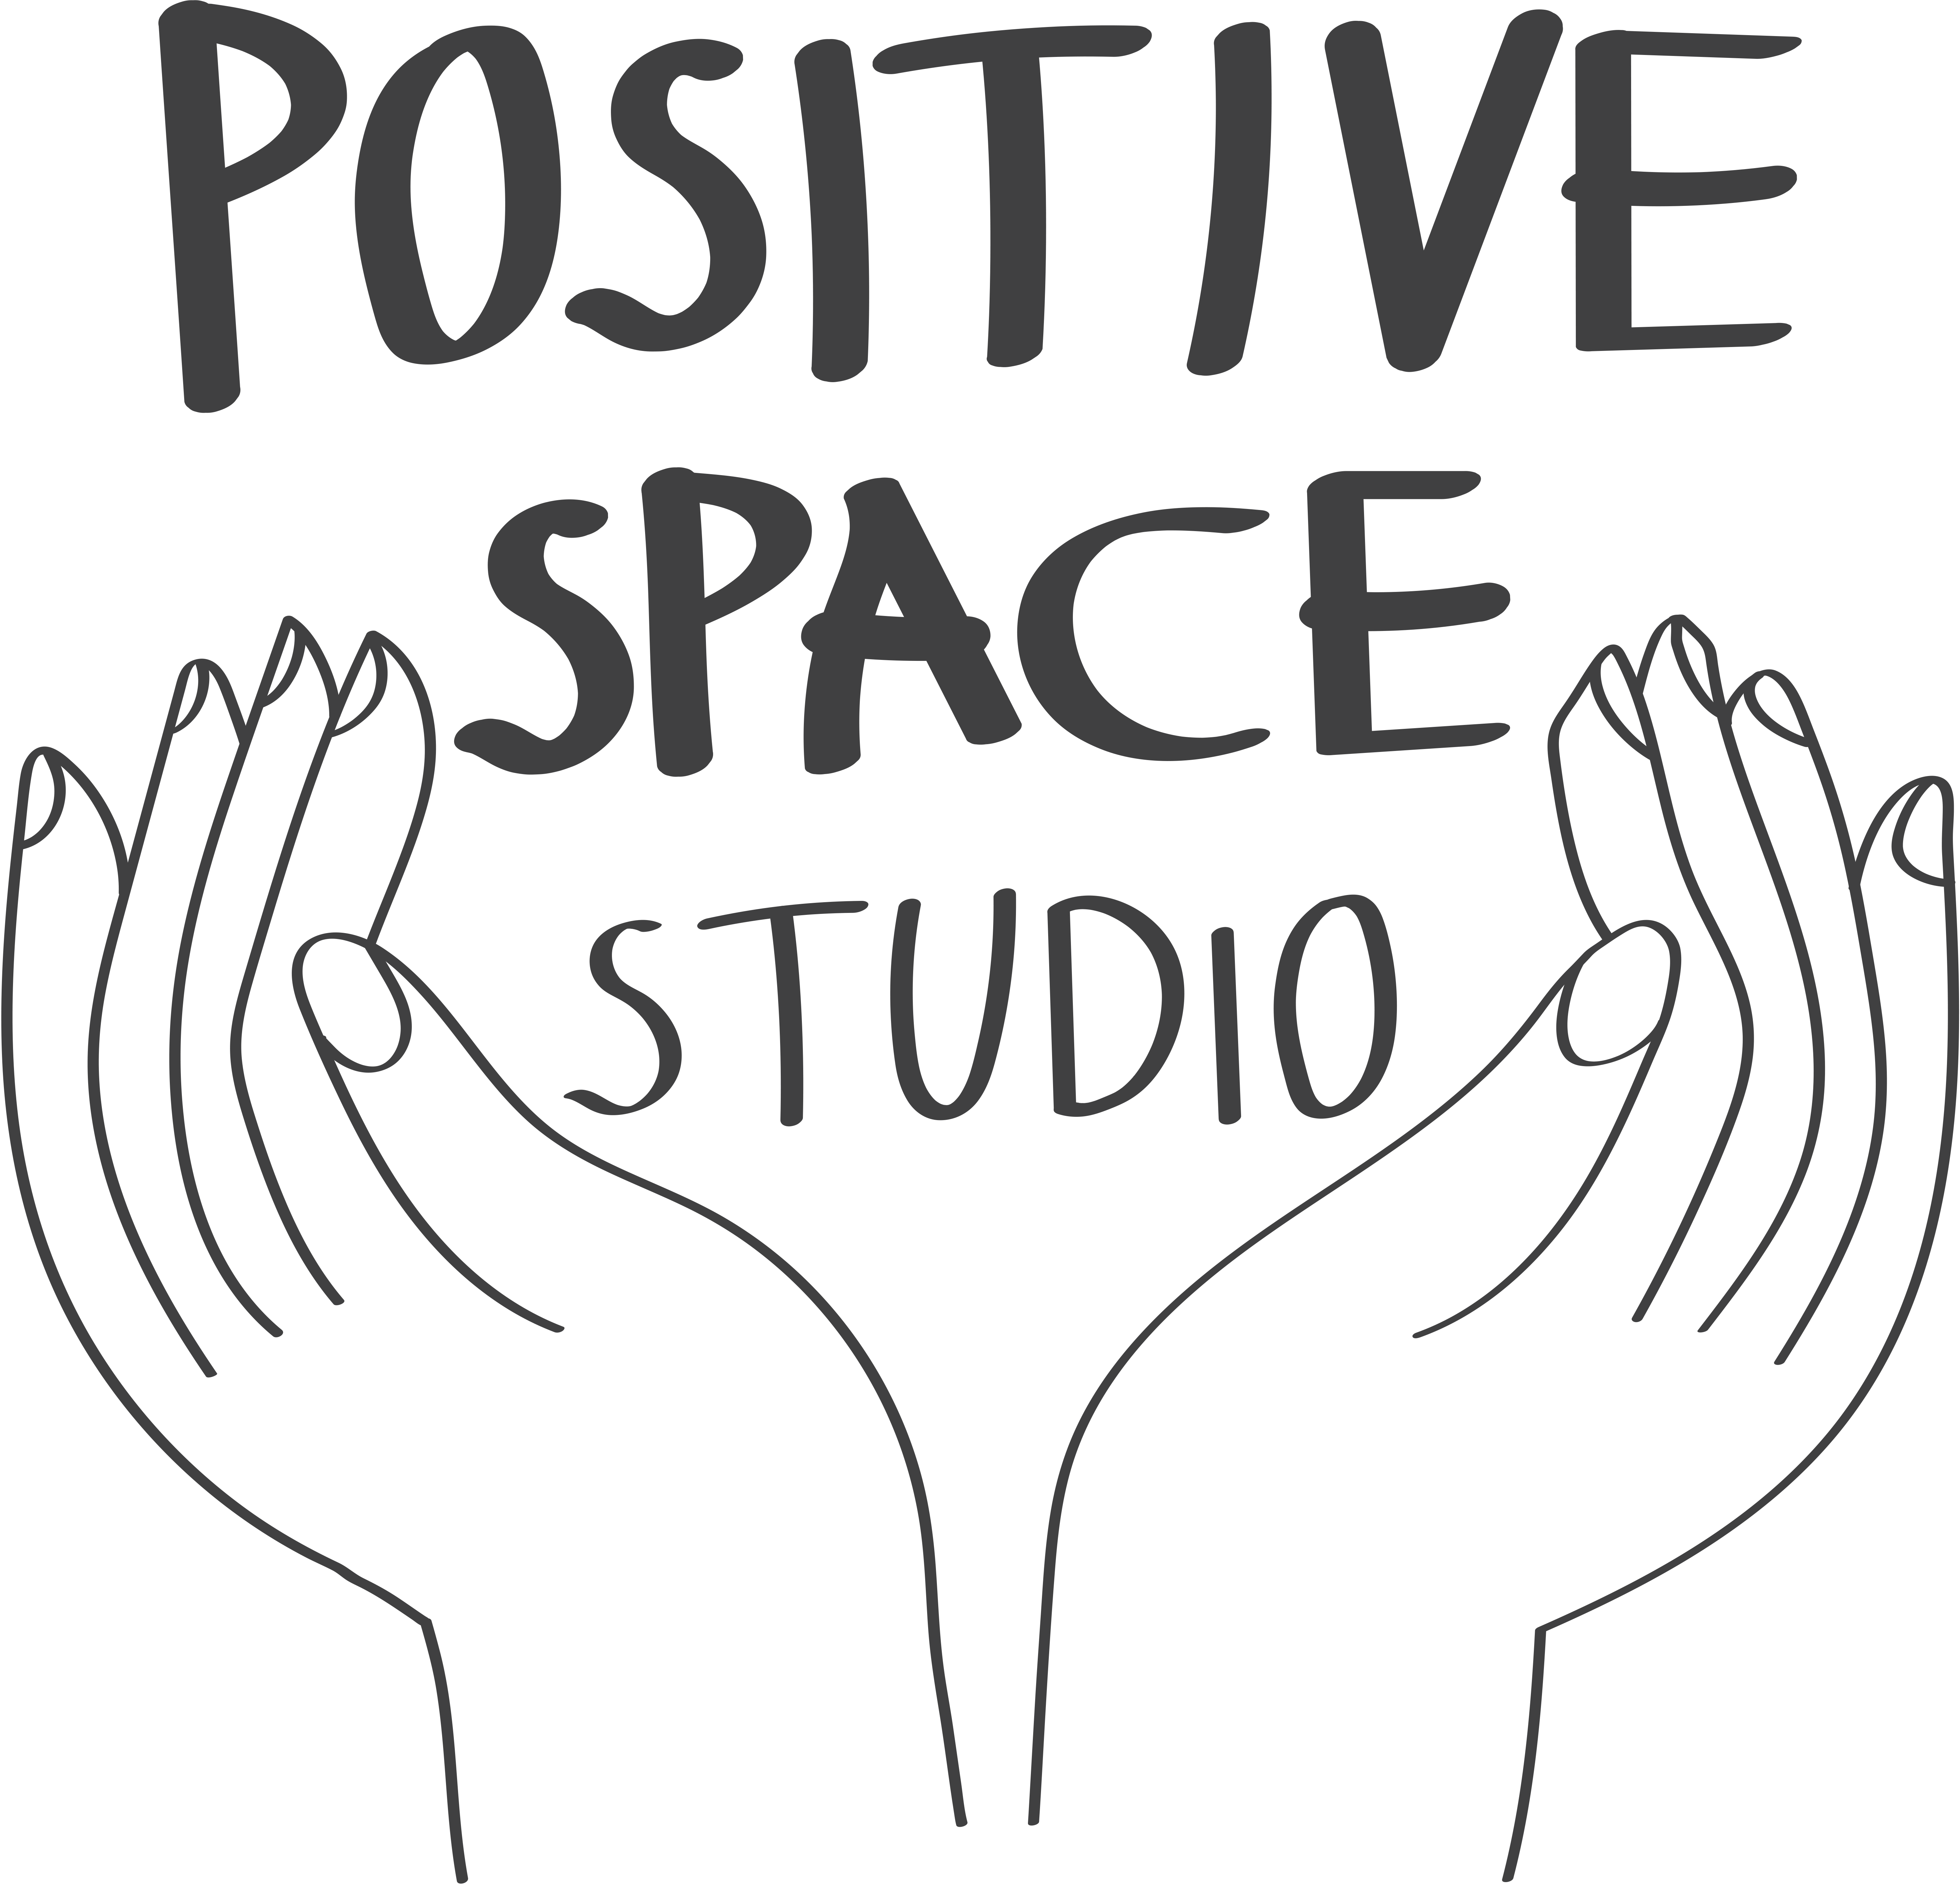 Positive space studio